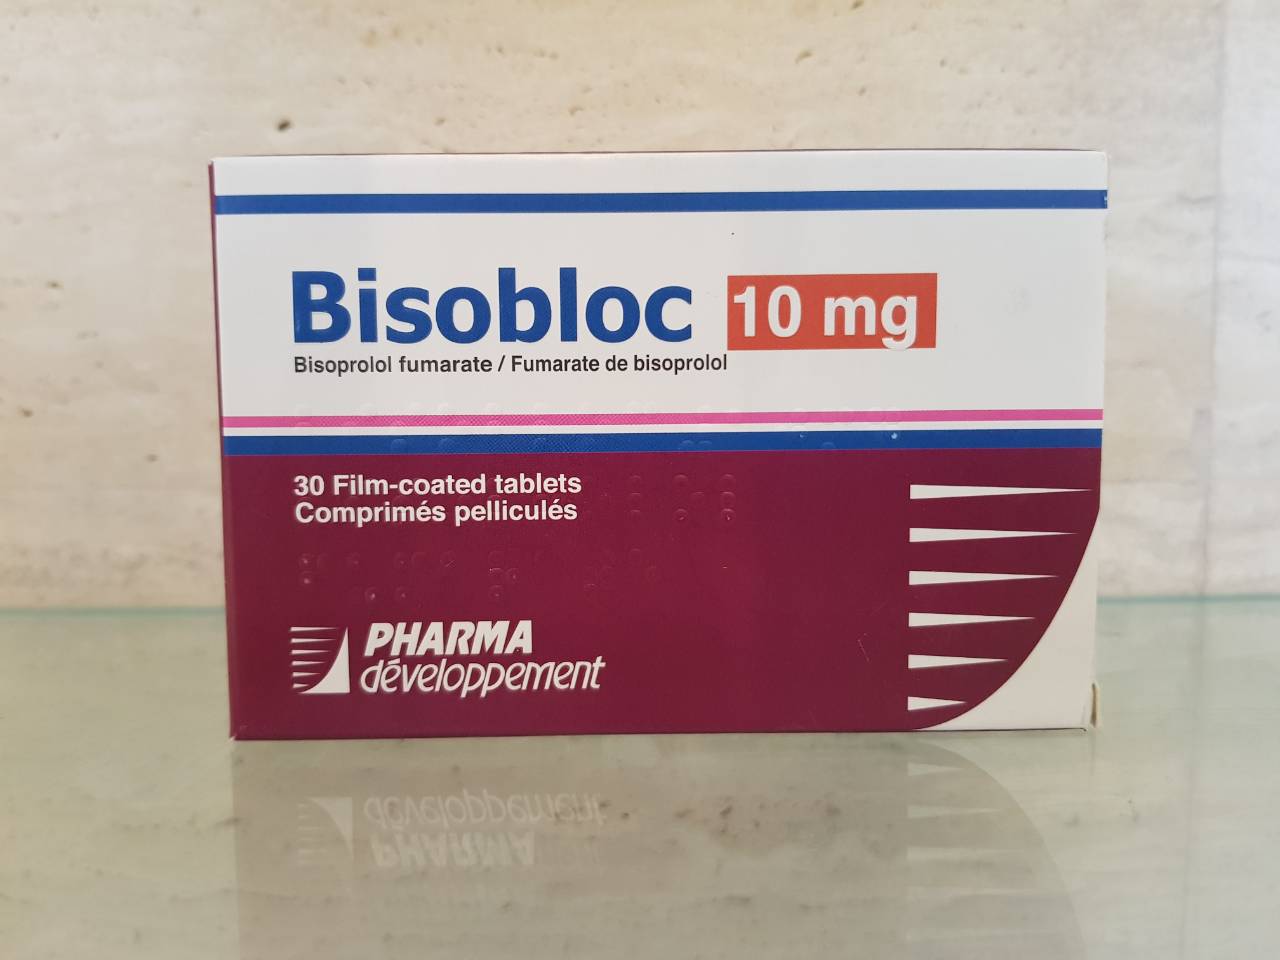 Bisobloc 10 mg